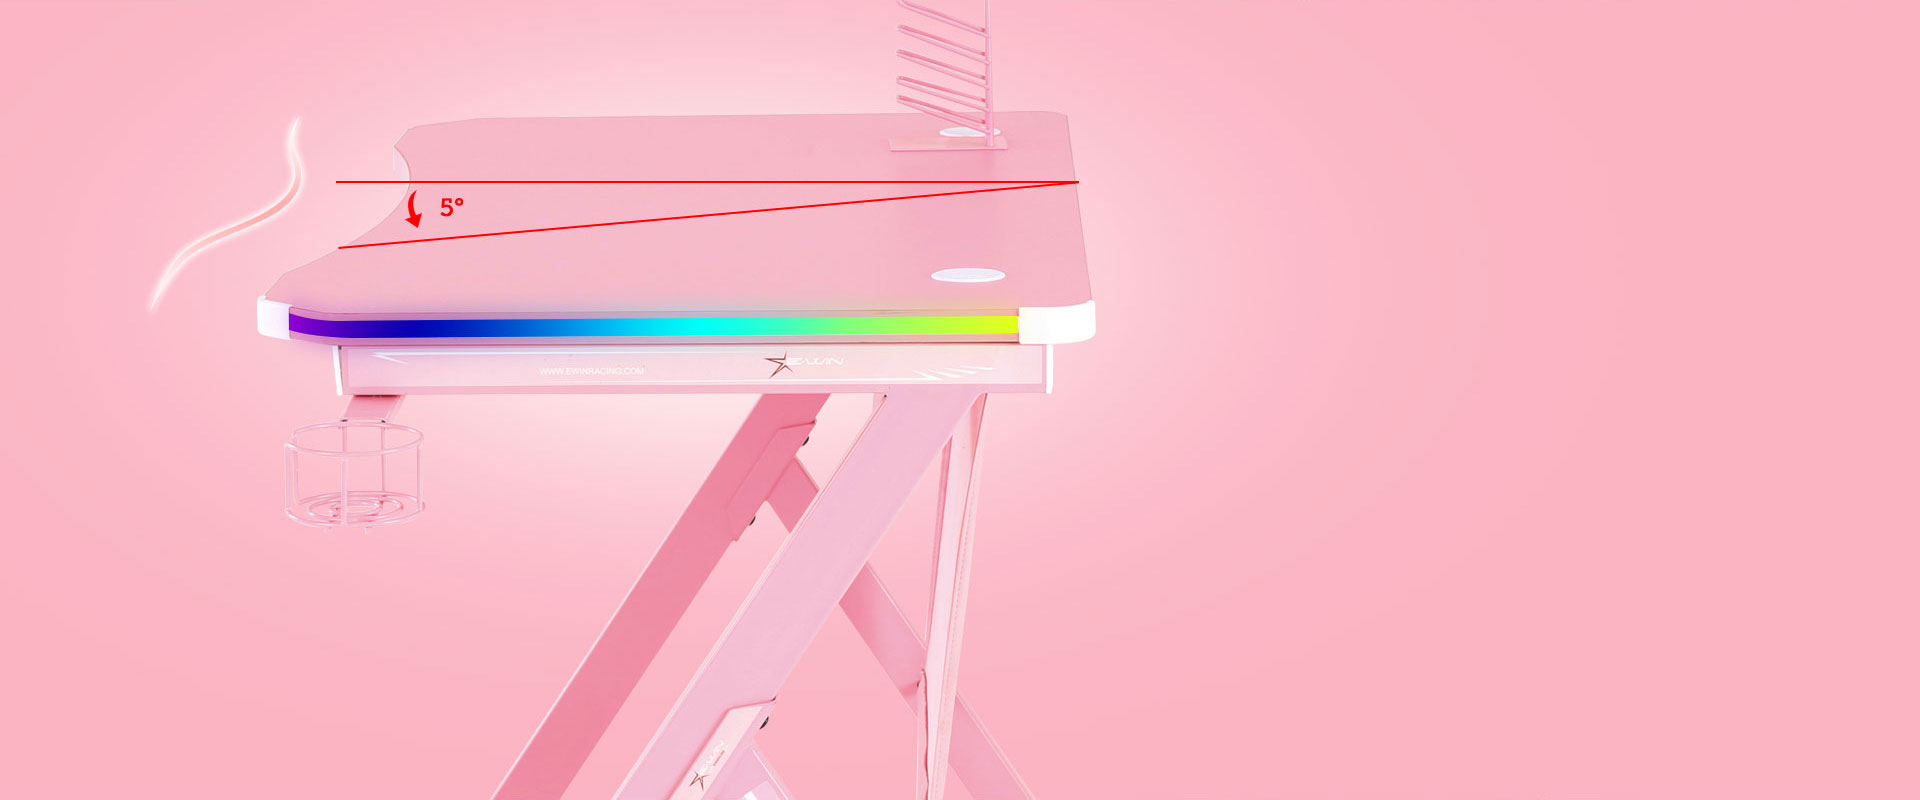 E-WIN Pink RGB Gaming Desk